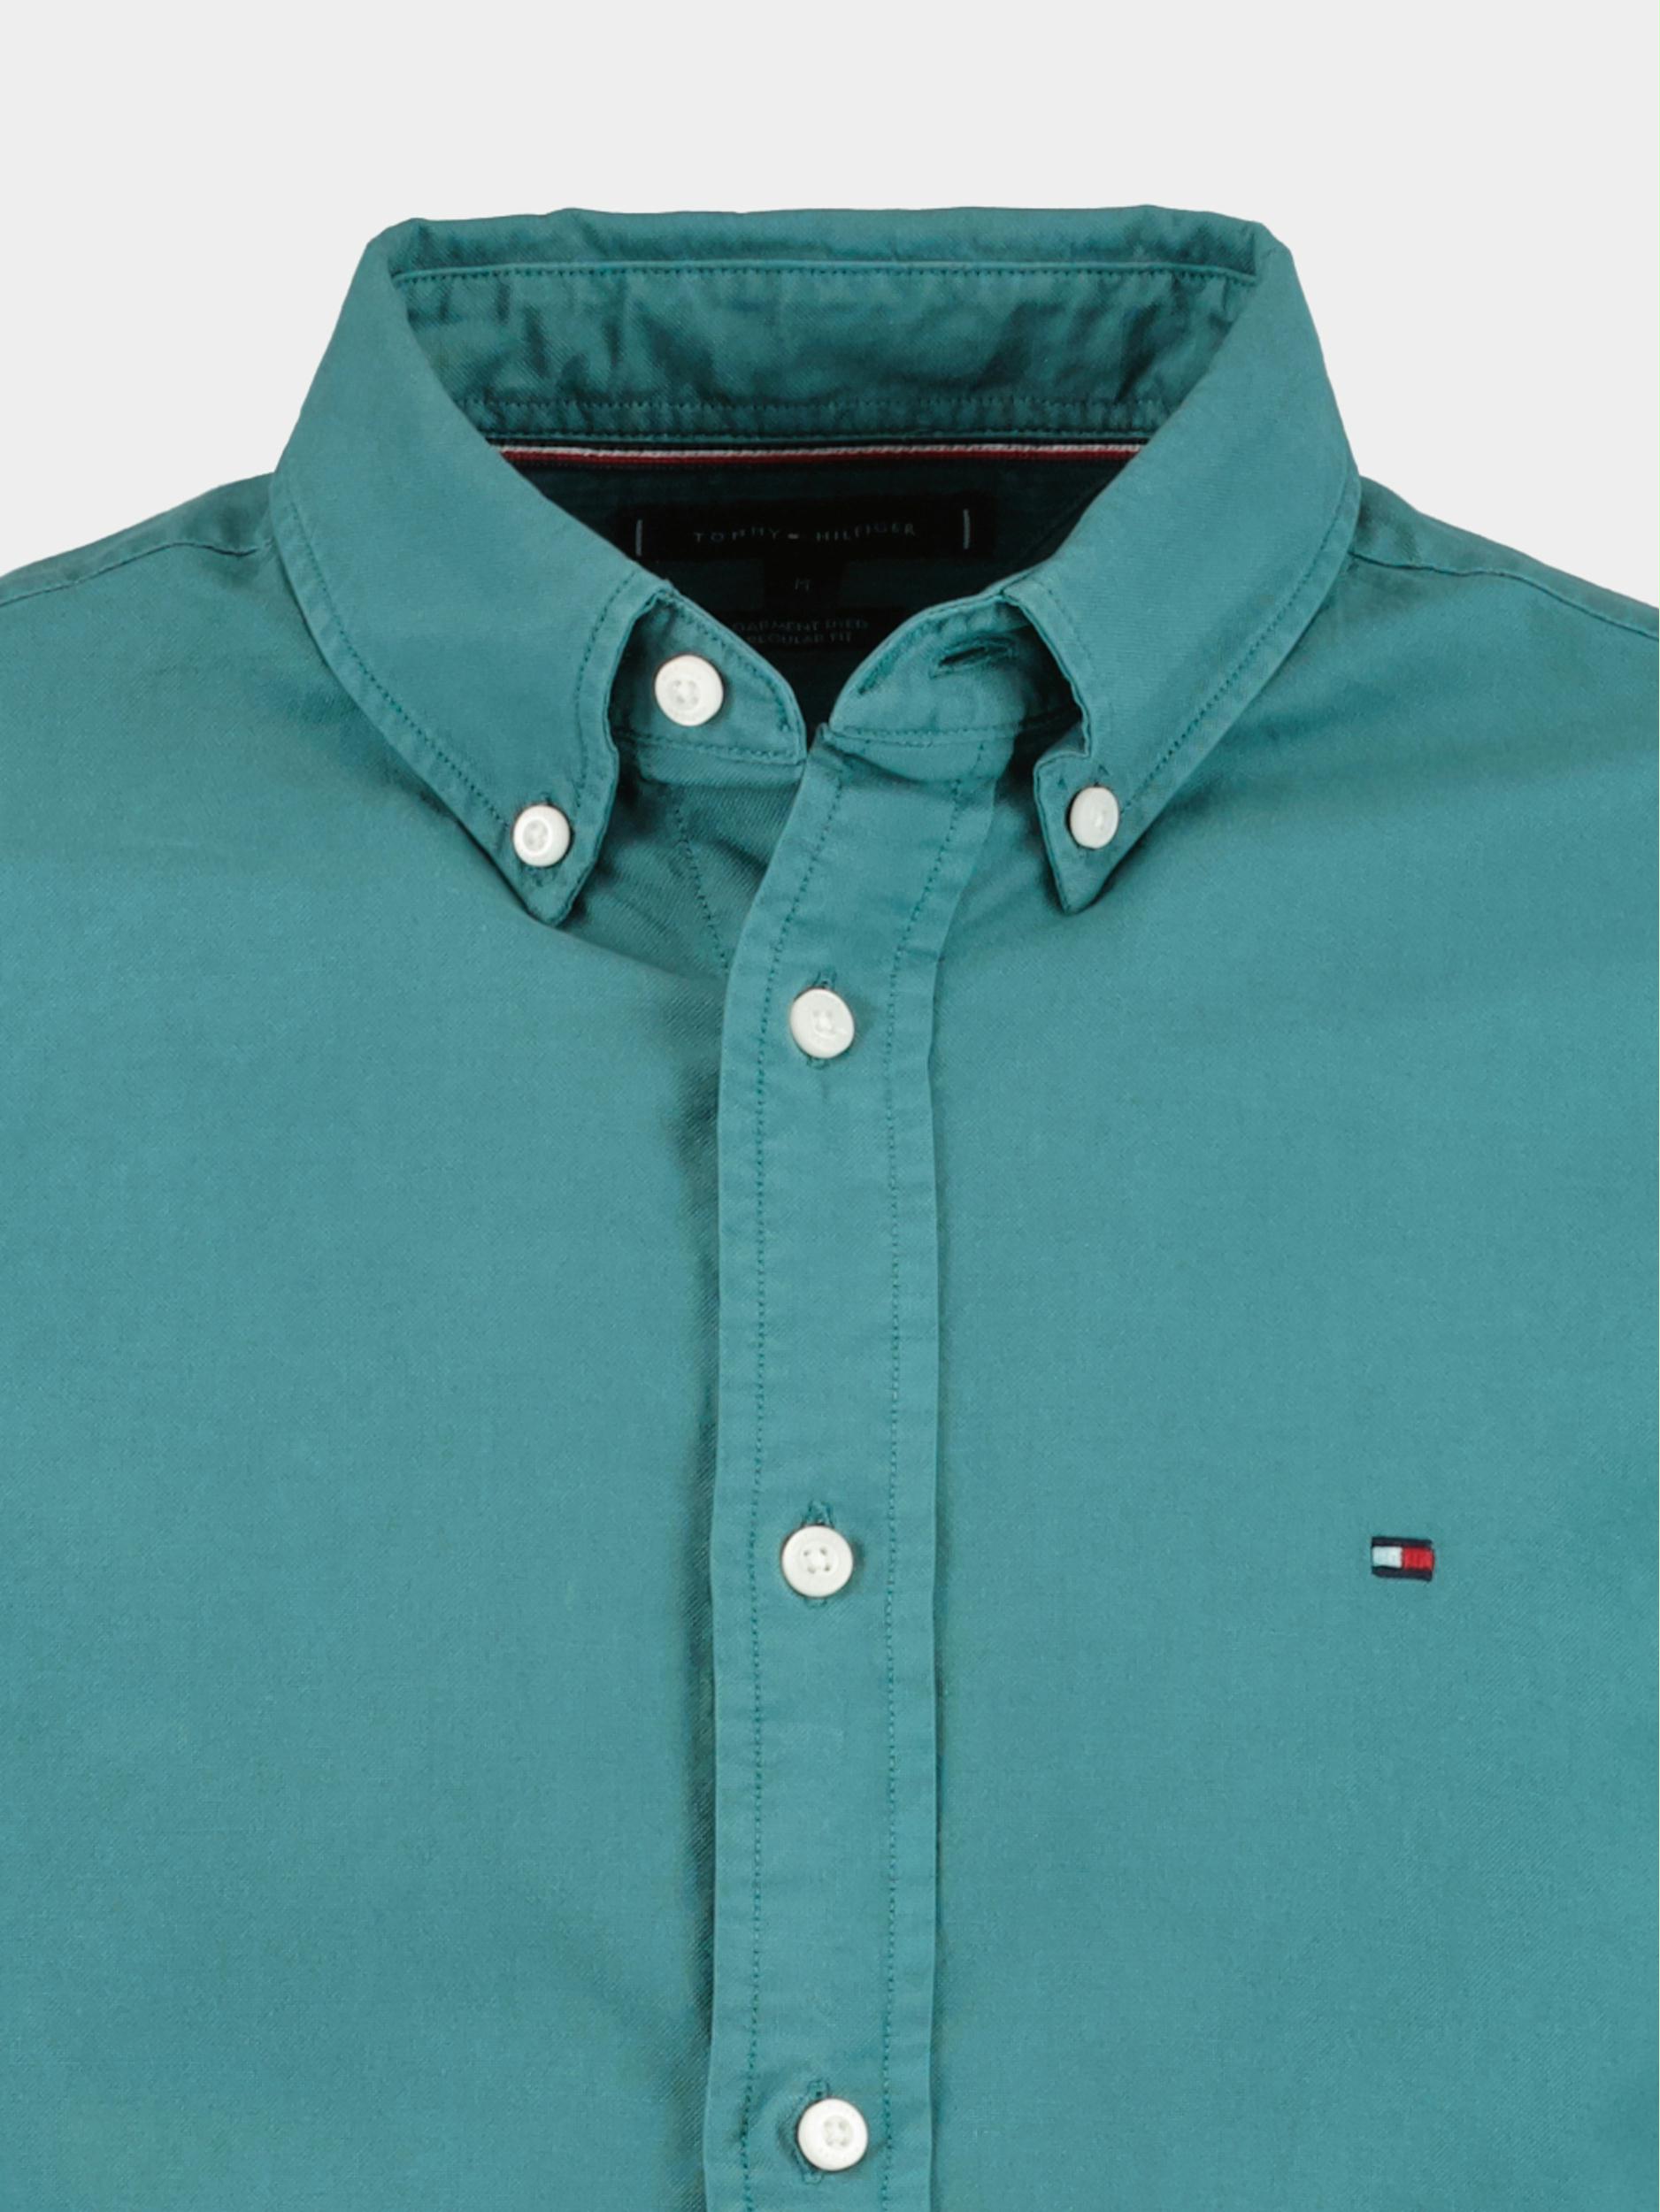 Tommy Hilfiger Casual hemd lange mouw Groen Pigment garment dye MW0MW30677/MB6